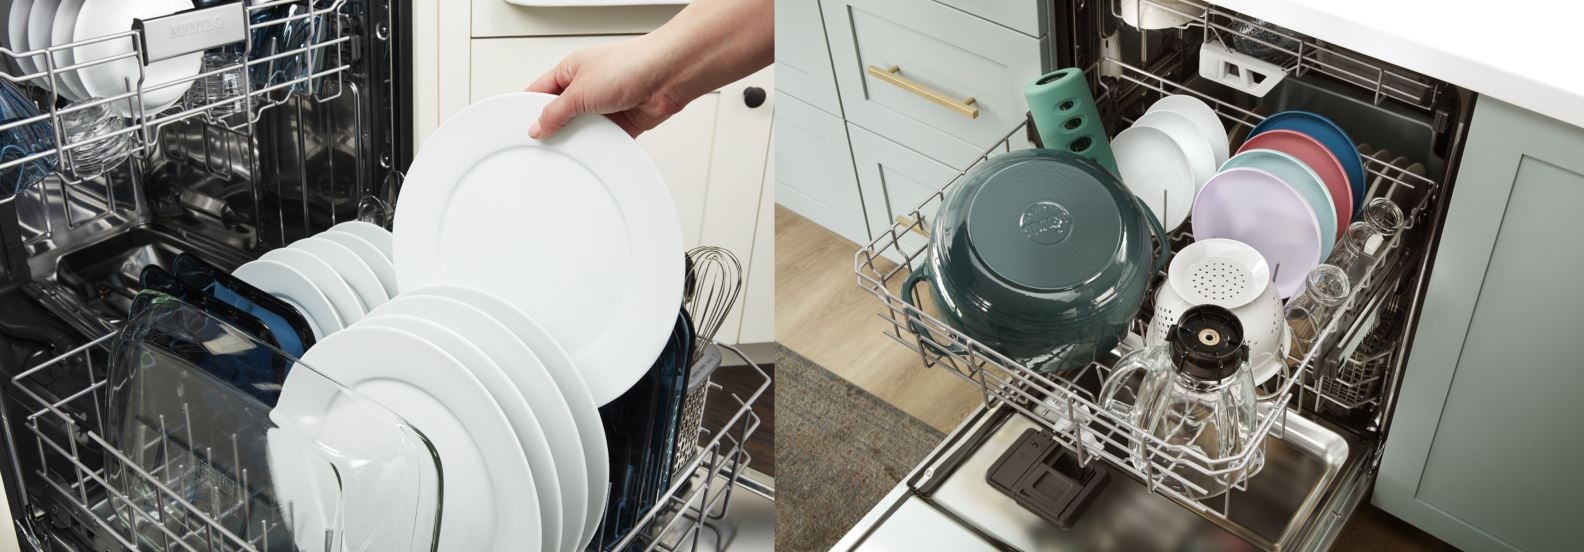 appliances-showdown-comparing-maytag-vs-whirlpool-spencer-s-tv